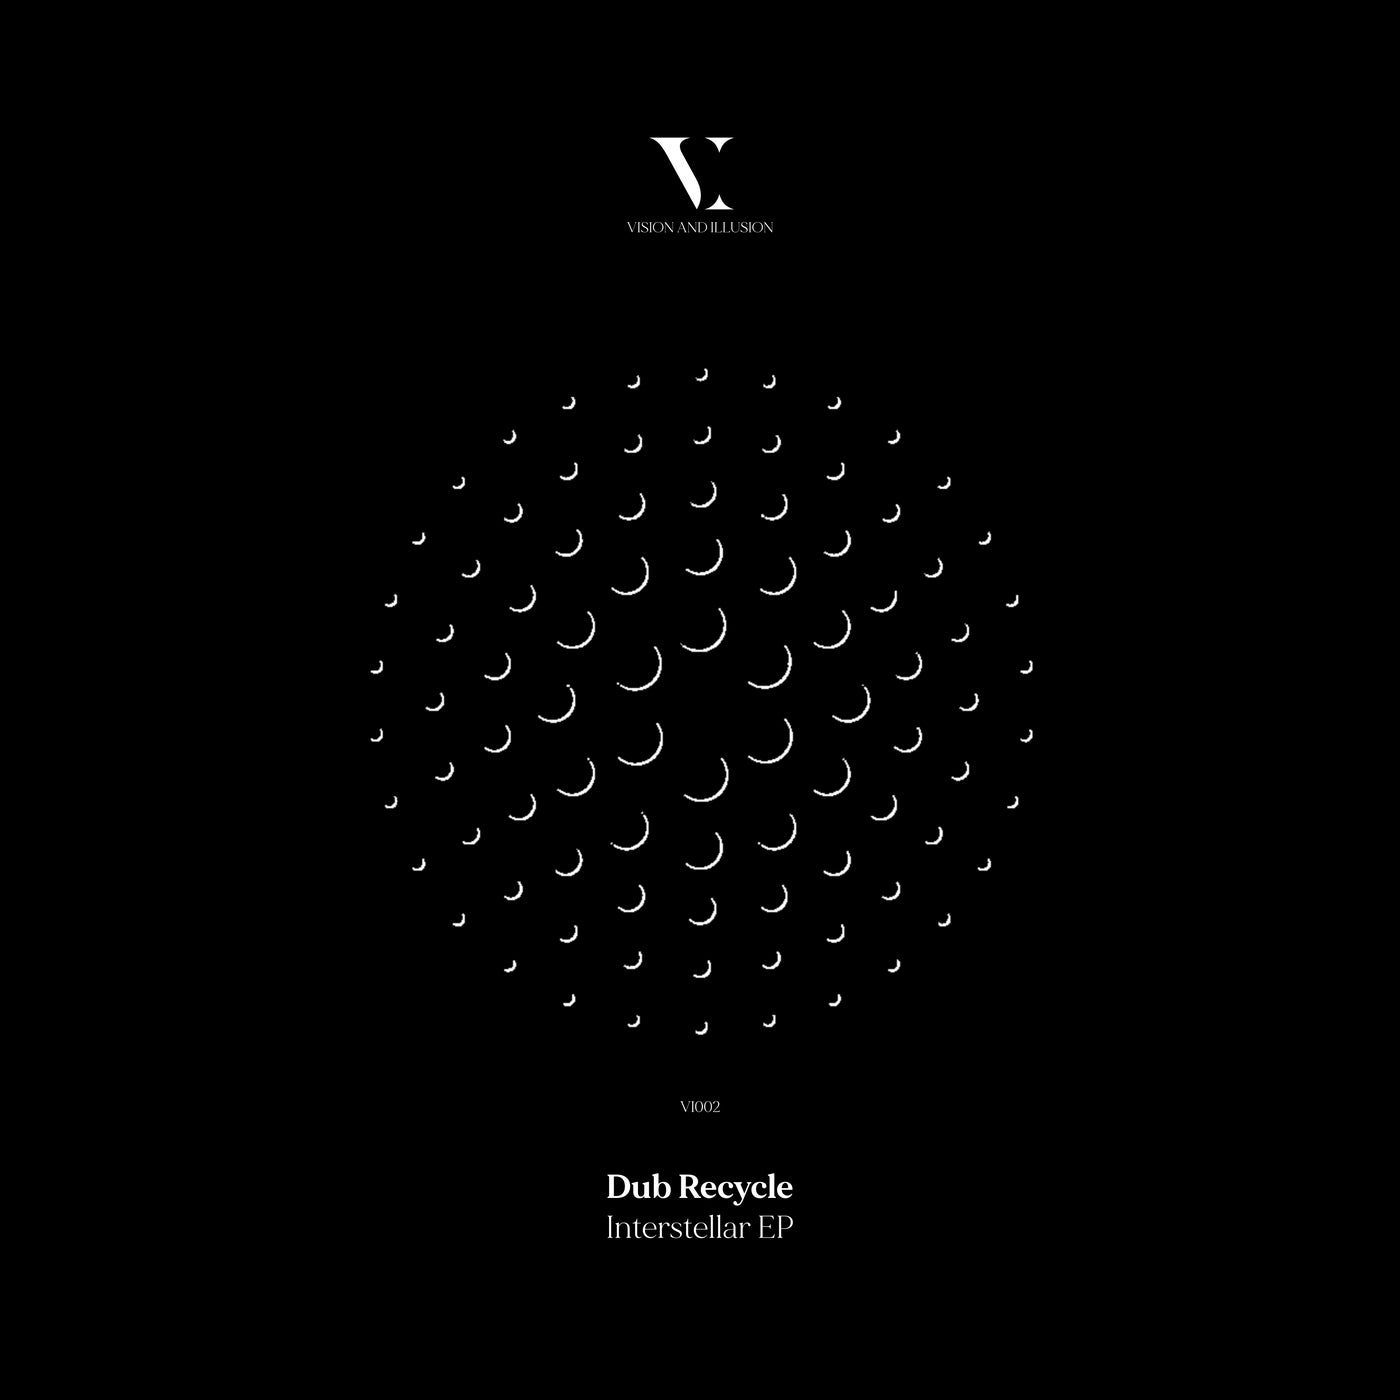 Dub Recycle – Interstellar EP [VI002]